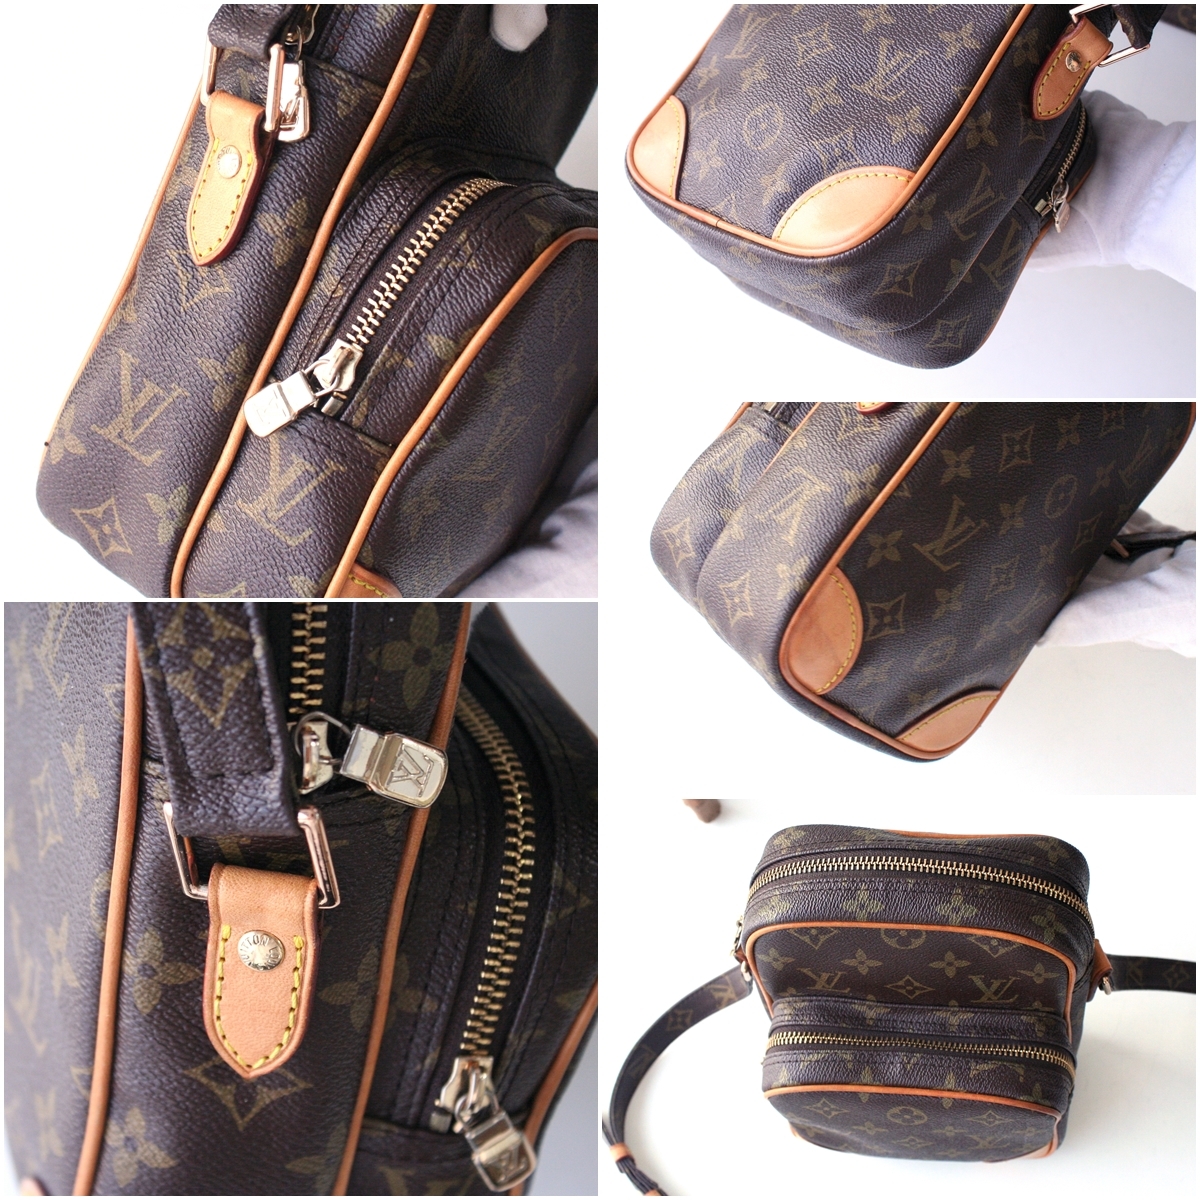 Louis Vuitton Monogram Amazon Body Cross handbag authentic vintage - Bags, Handbags & Cases